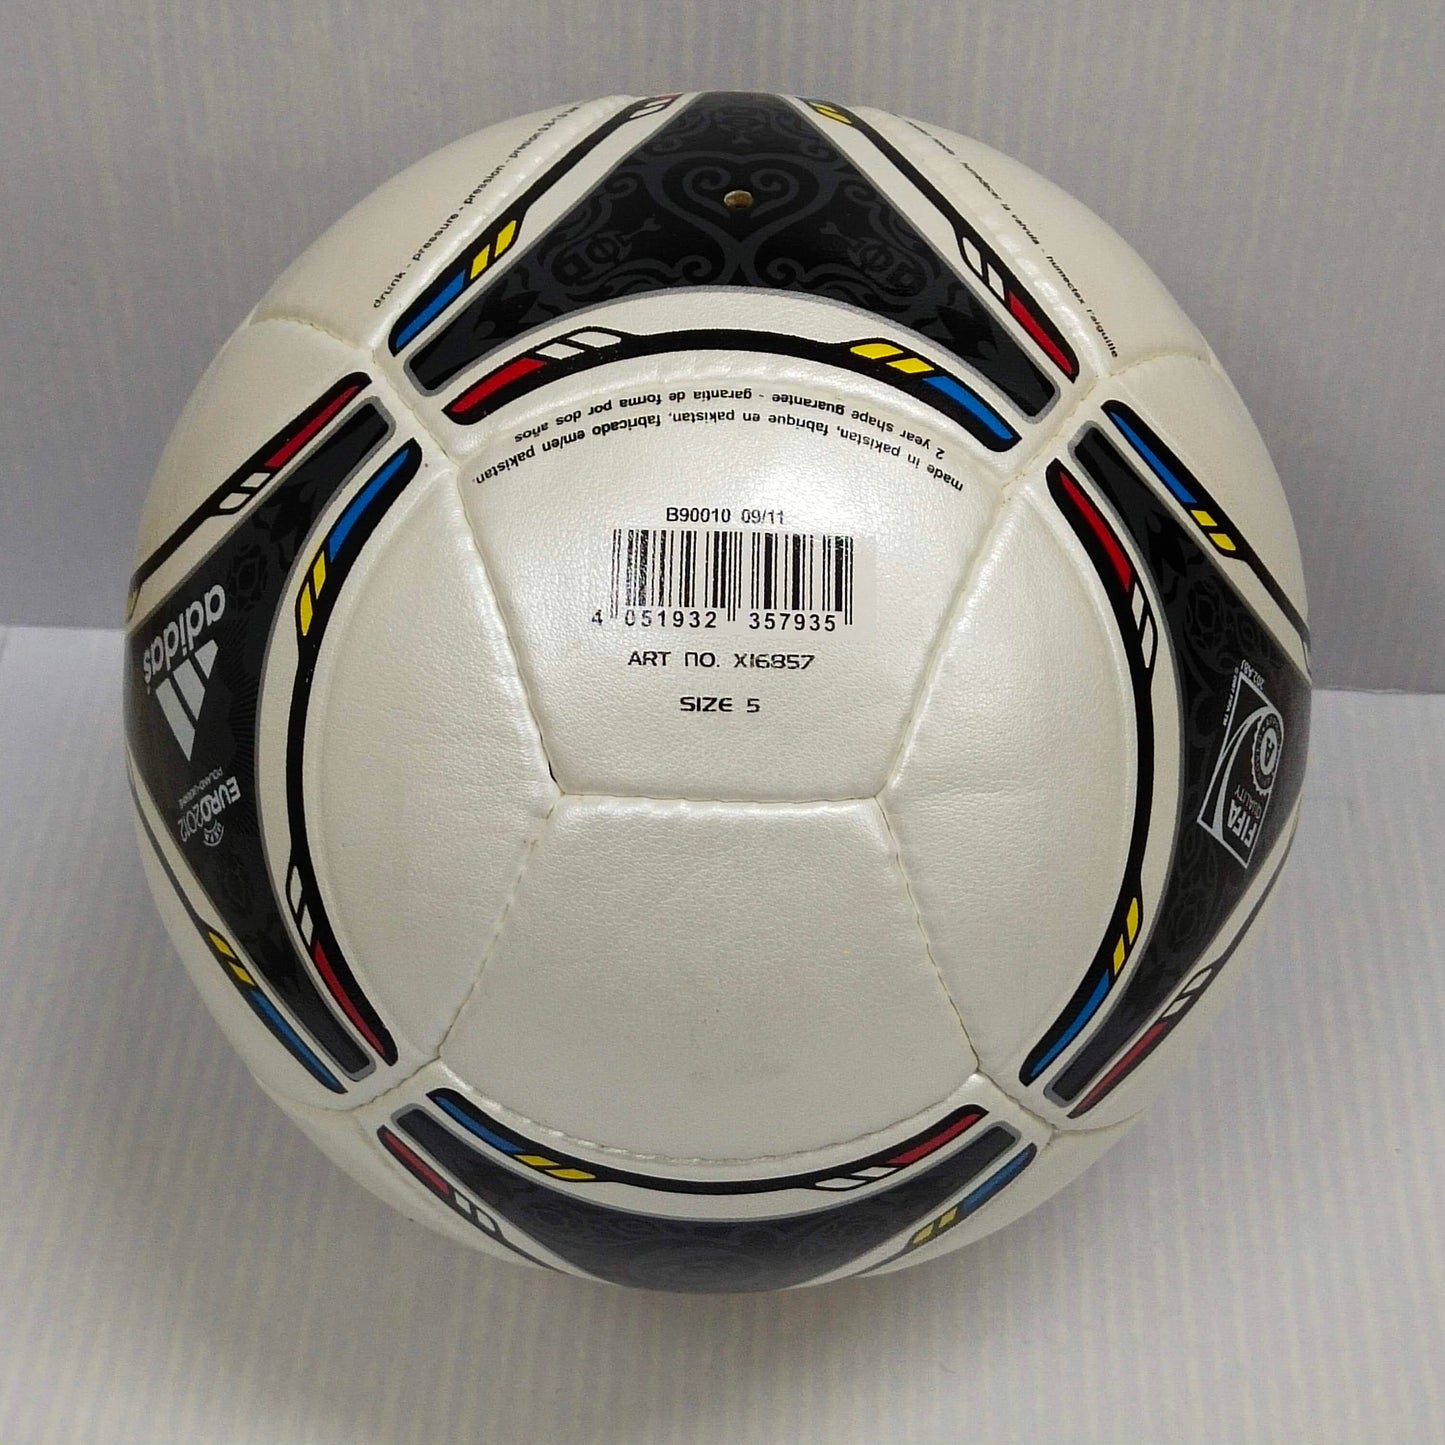 Adidas Tango 12 | 2012 | UEFA Europa League | Official Match Ball | Size 5 06